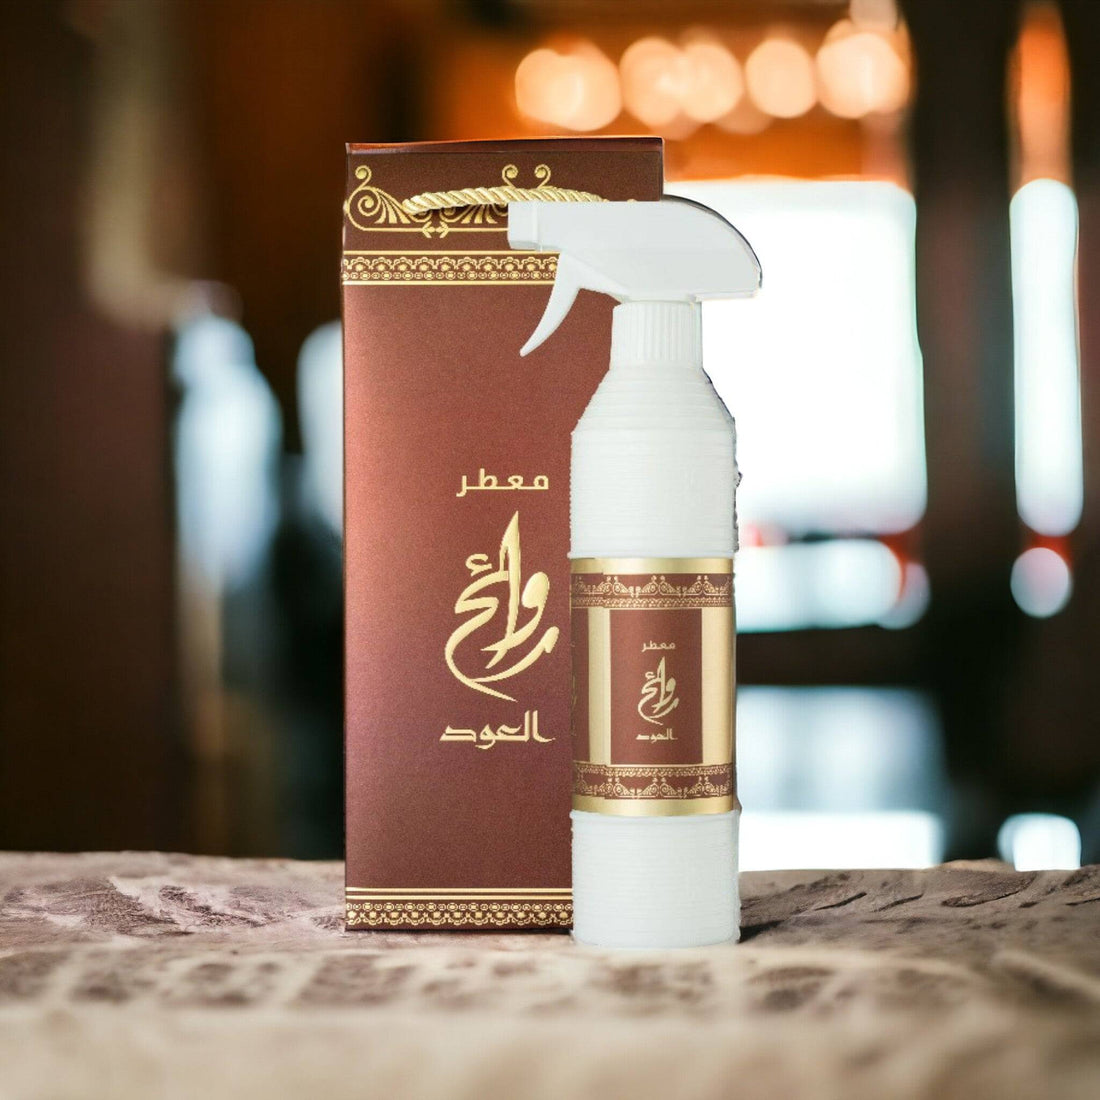 500ml Rawaieh Al Oud Air Freshener bottle from Oud Lover store, showcasing its luxurious Arabian oud scents.